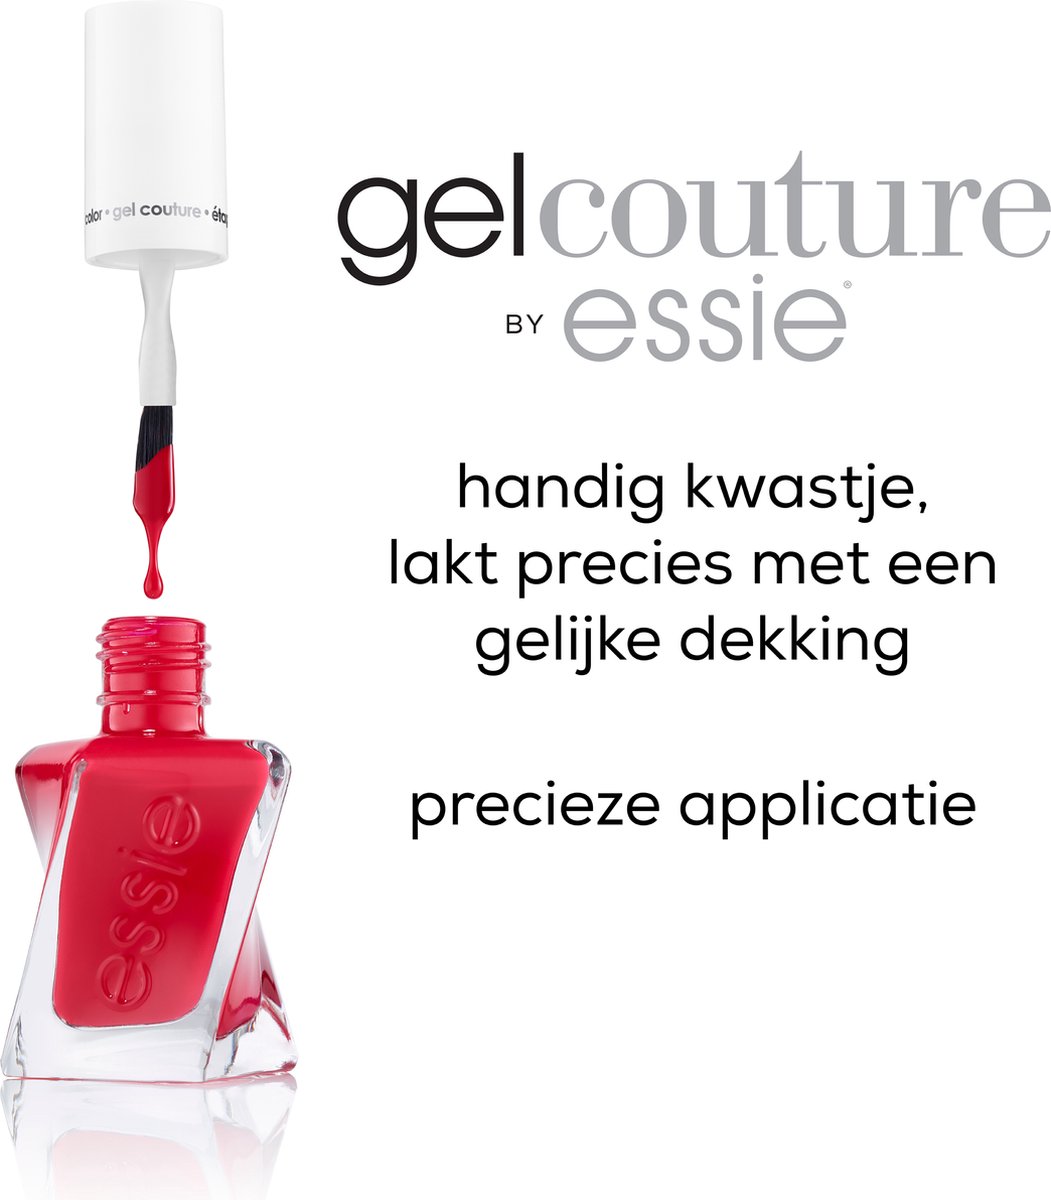 essie - gel couture™ - - nagellak - roze to - langhoudende ml 13,5 150 | haute bol trot